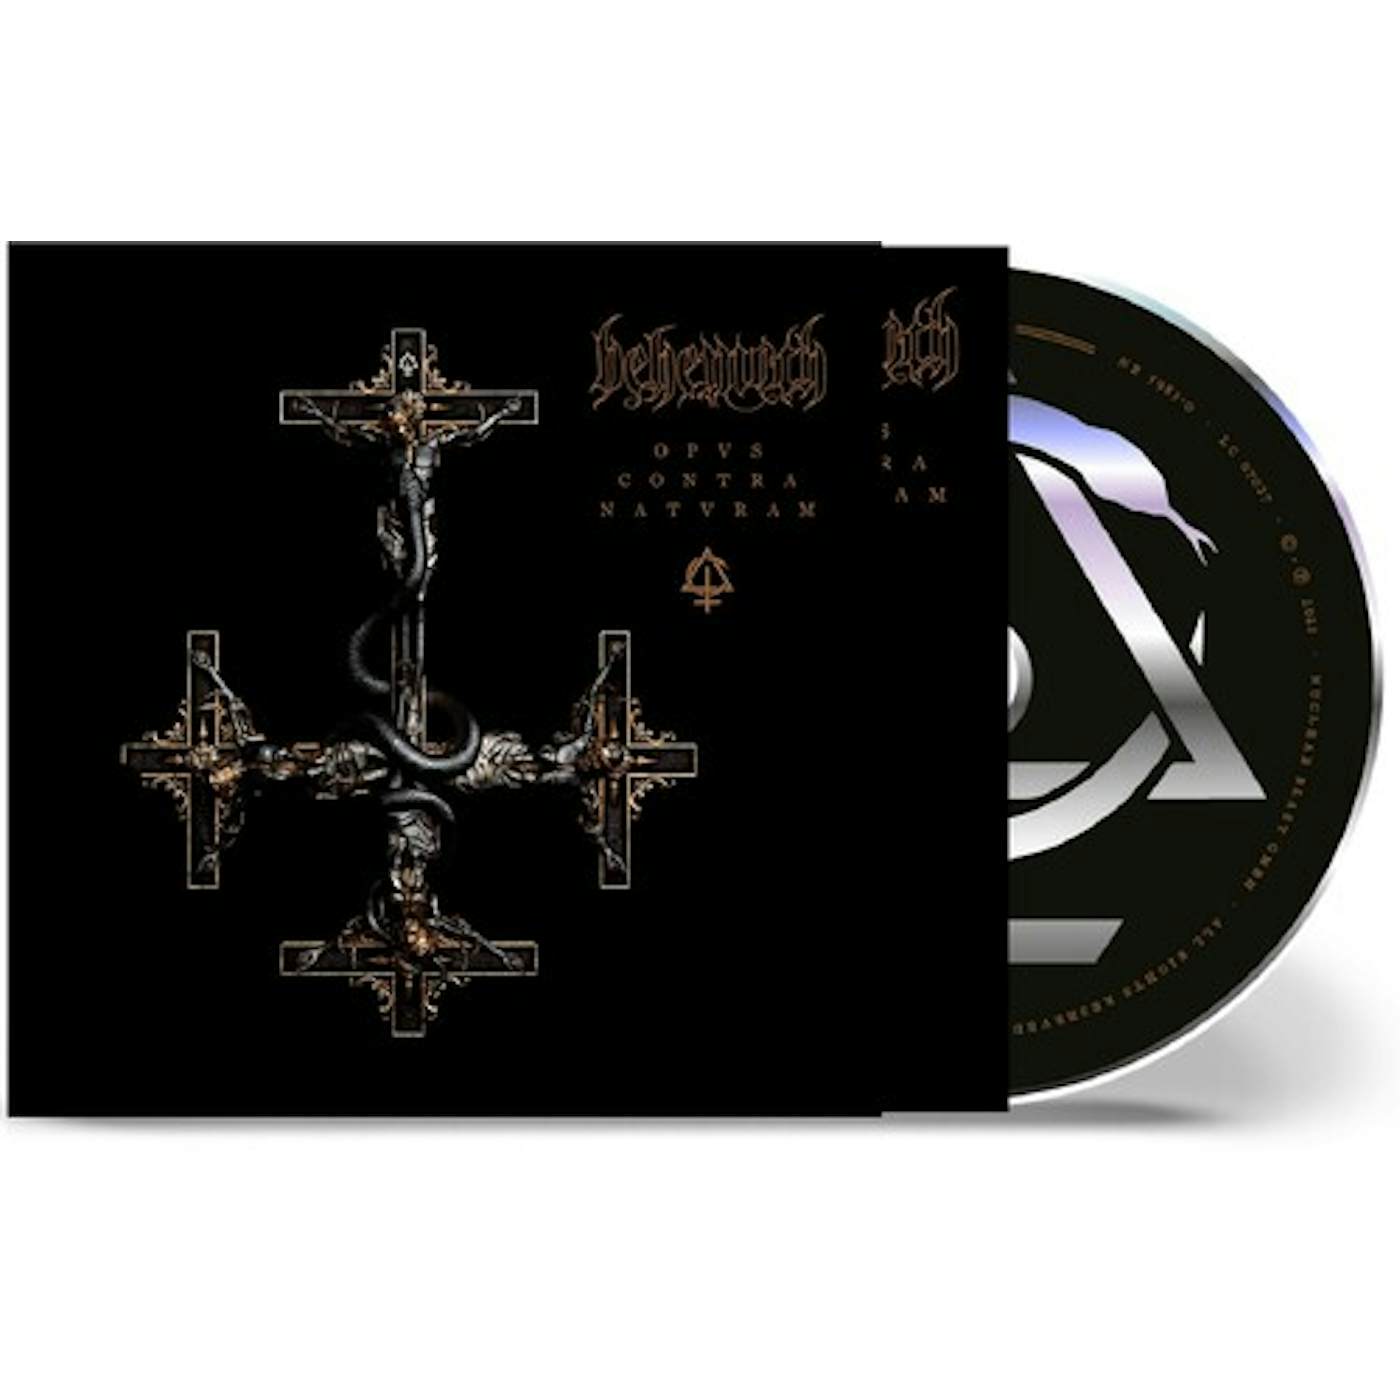 Behemoth OPVS CONTRA NATVRAM CD